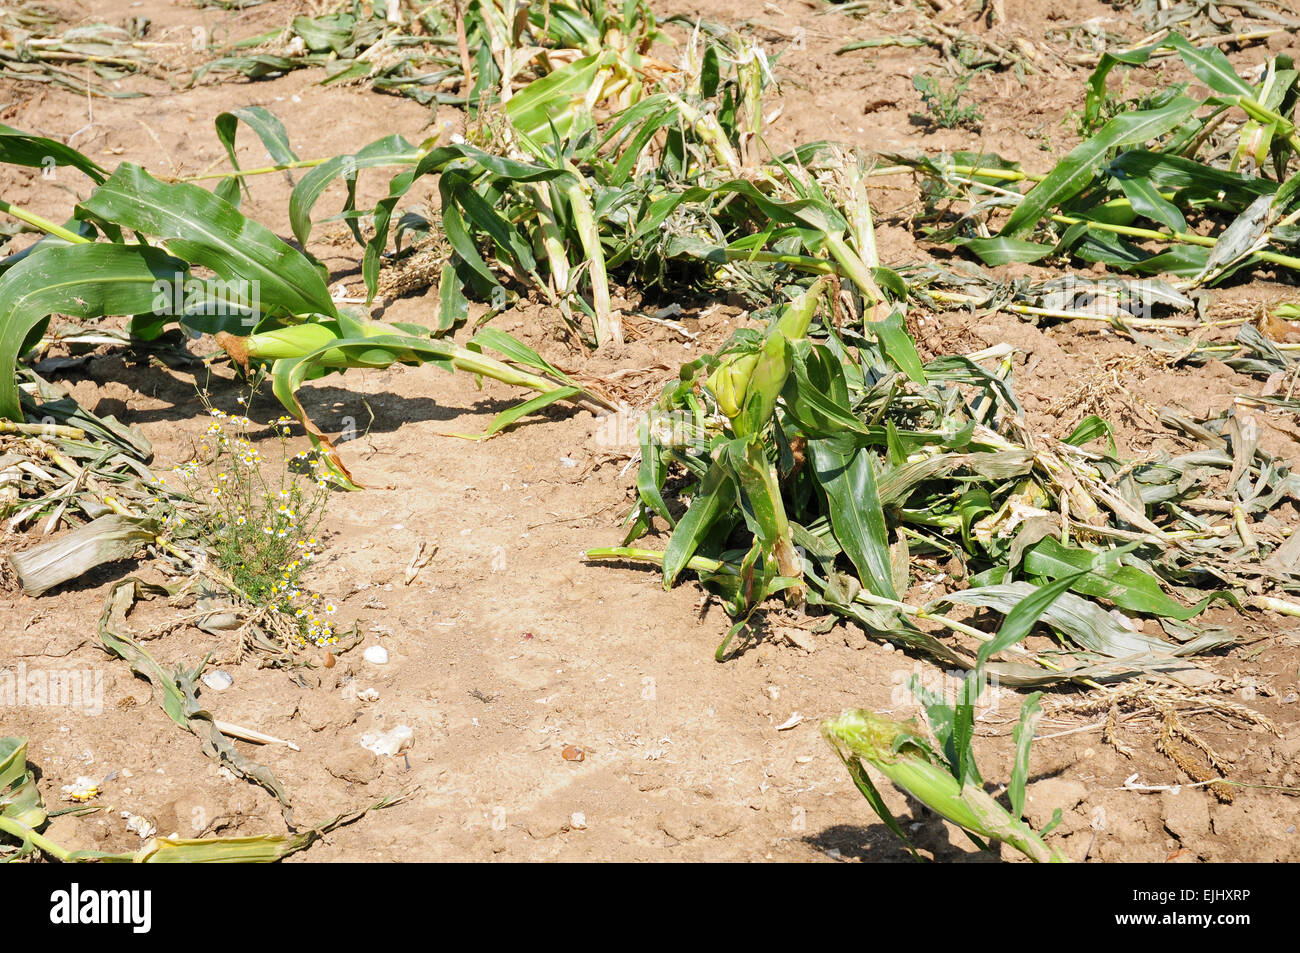 Sweet corn cobs left on field after harvesting. Poor combining. Stock Photo